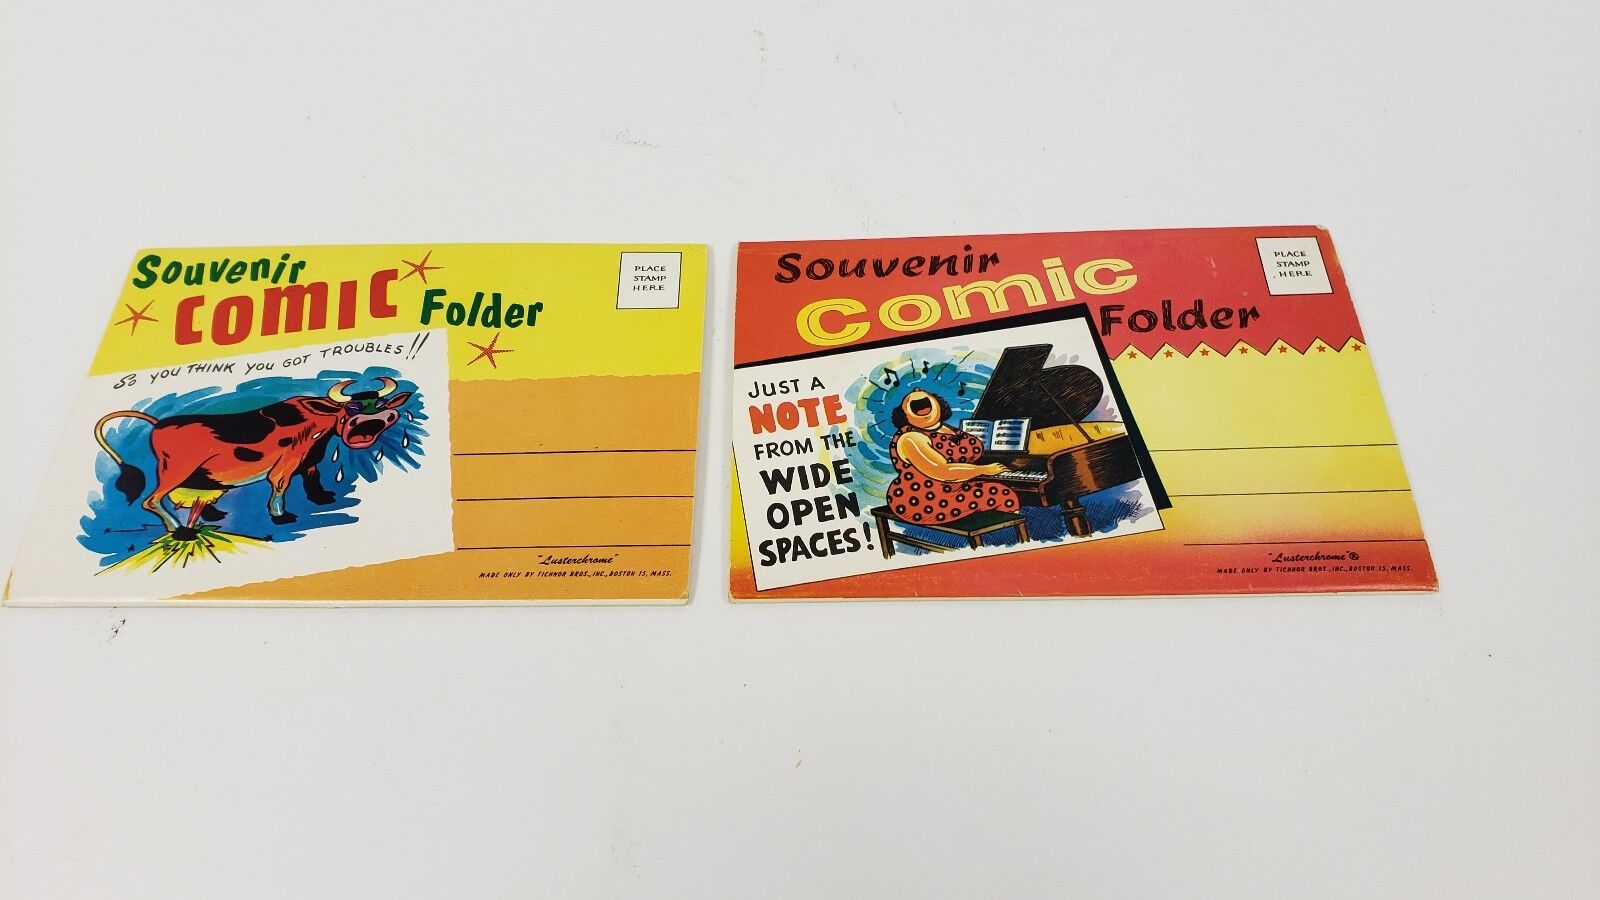 2 Vintage Souvenir Comic Folders Unused Made By Tichnor Brothers Postcards #1&2